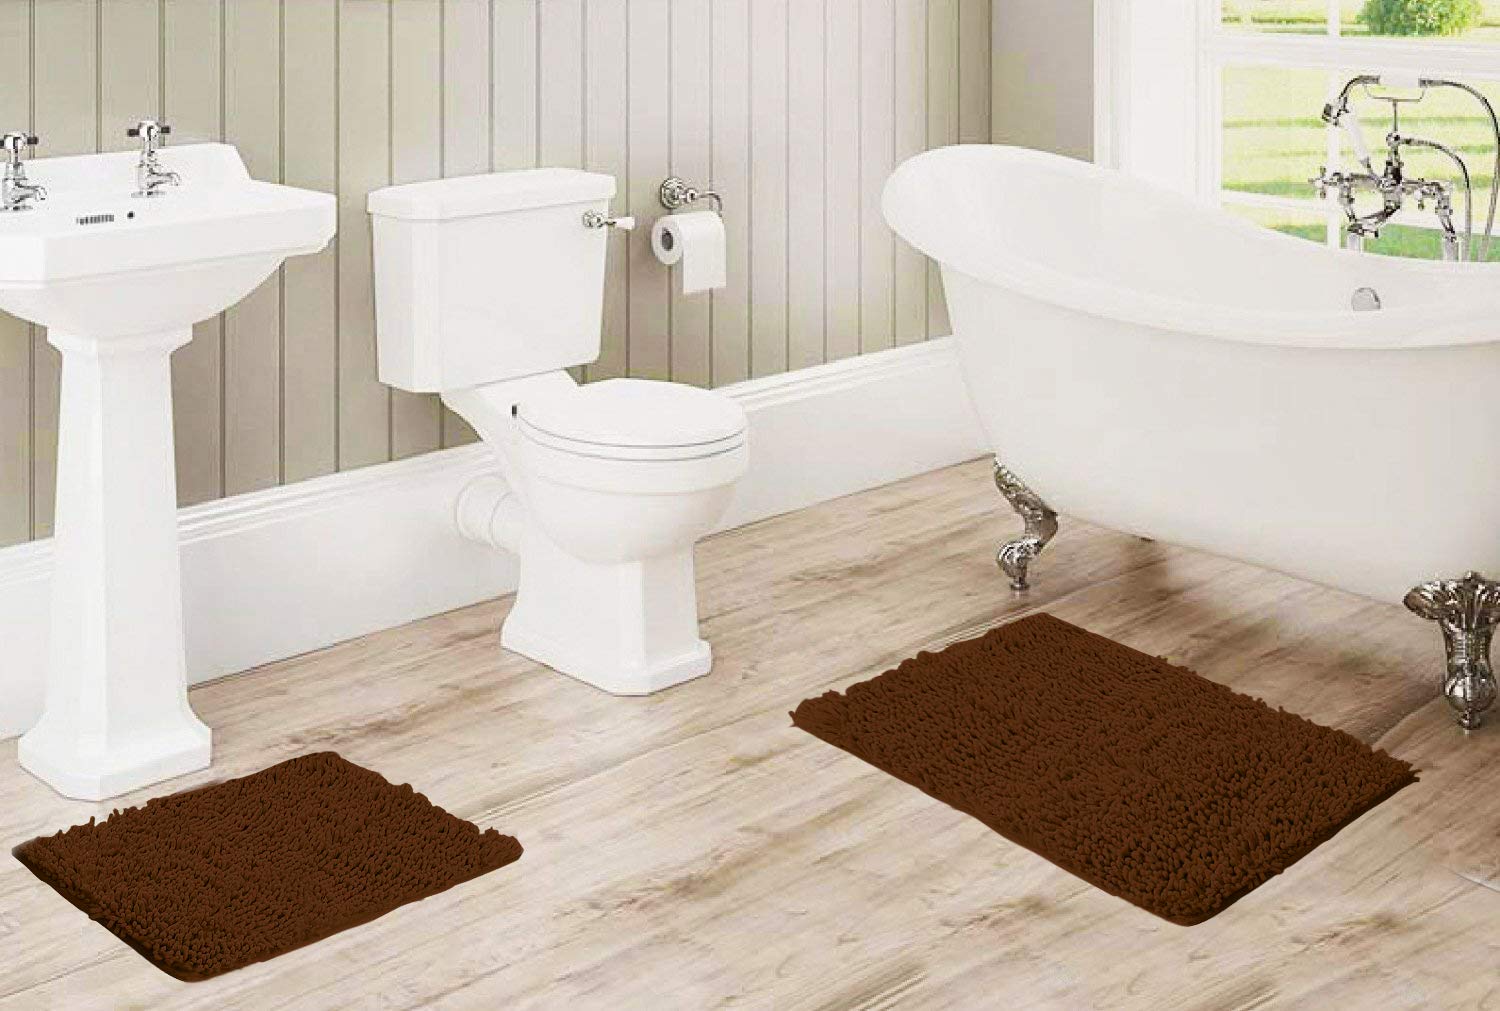 LuxUrux Bathroom Rug Set�Extra-Soft Plush Bath mat Shower Bathroom Rugs,1'' Chenille Microfiber Material, Super Absorbent (30 X 20'' + 23 x 15'', Brown)  - Very Good